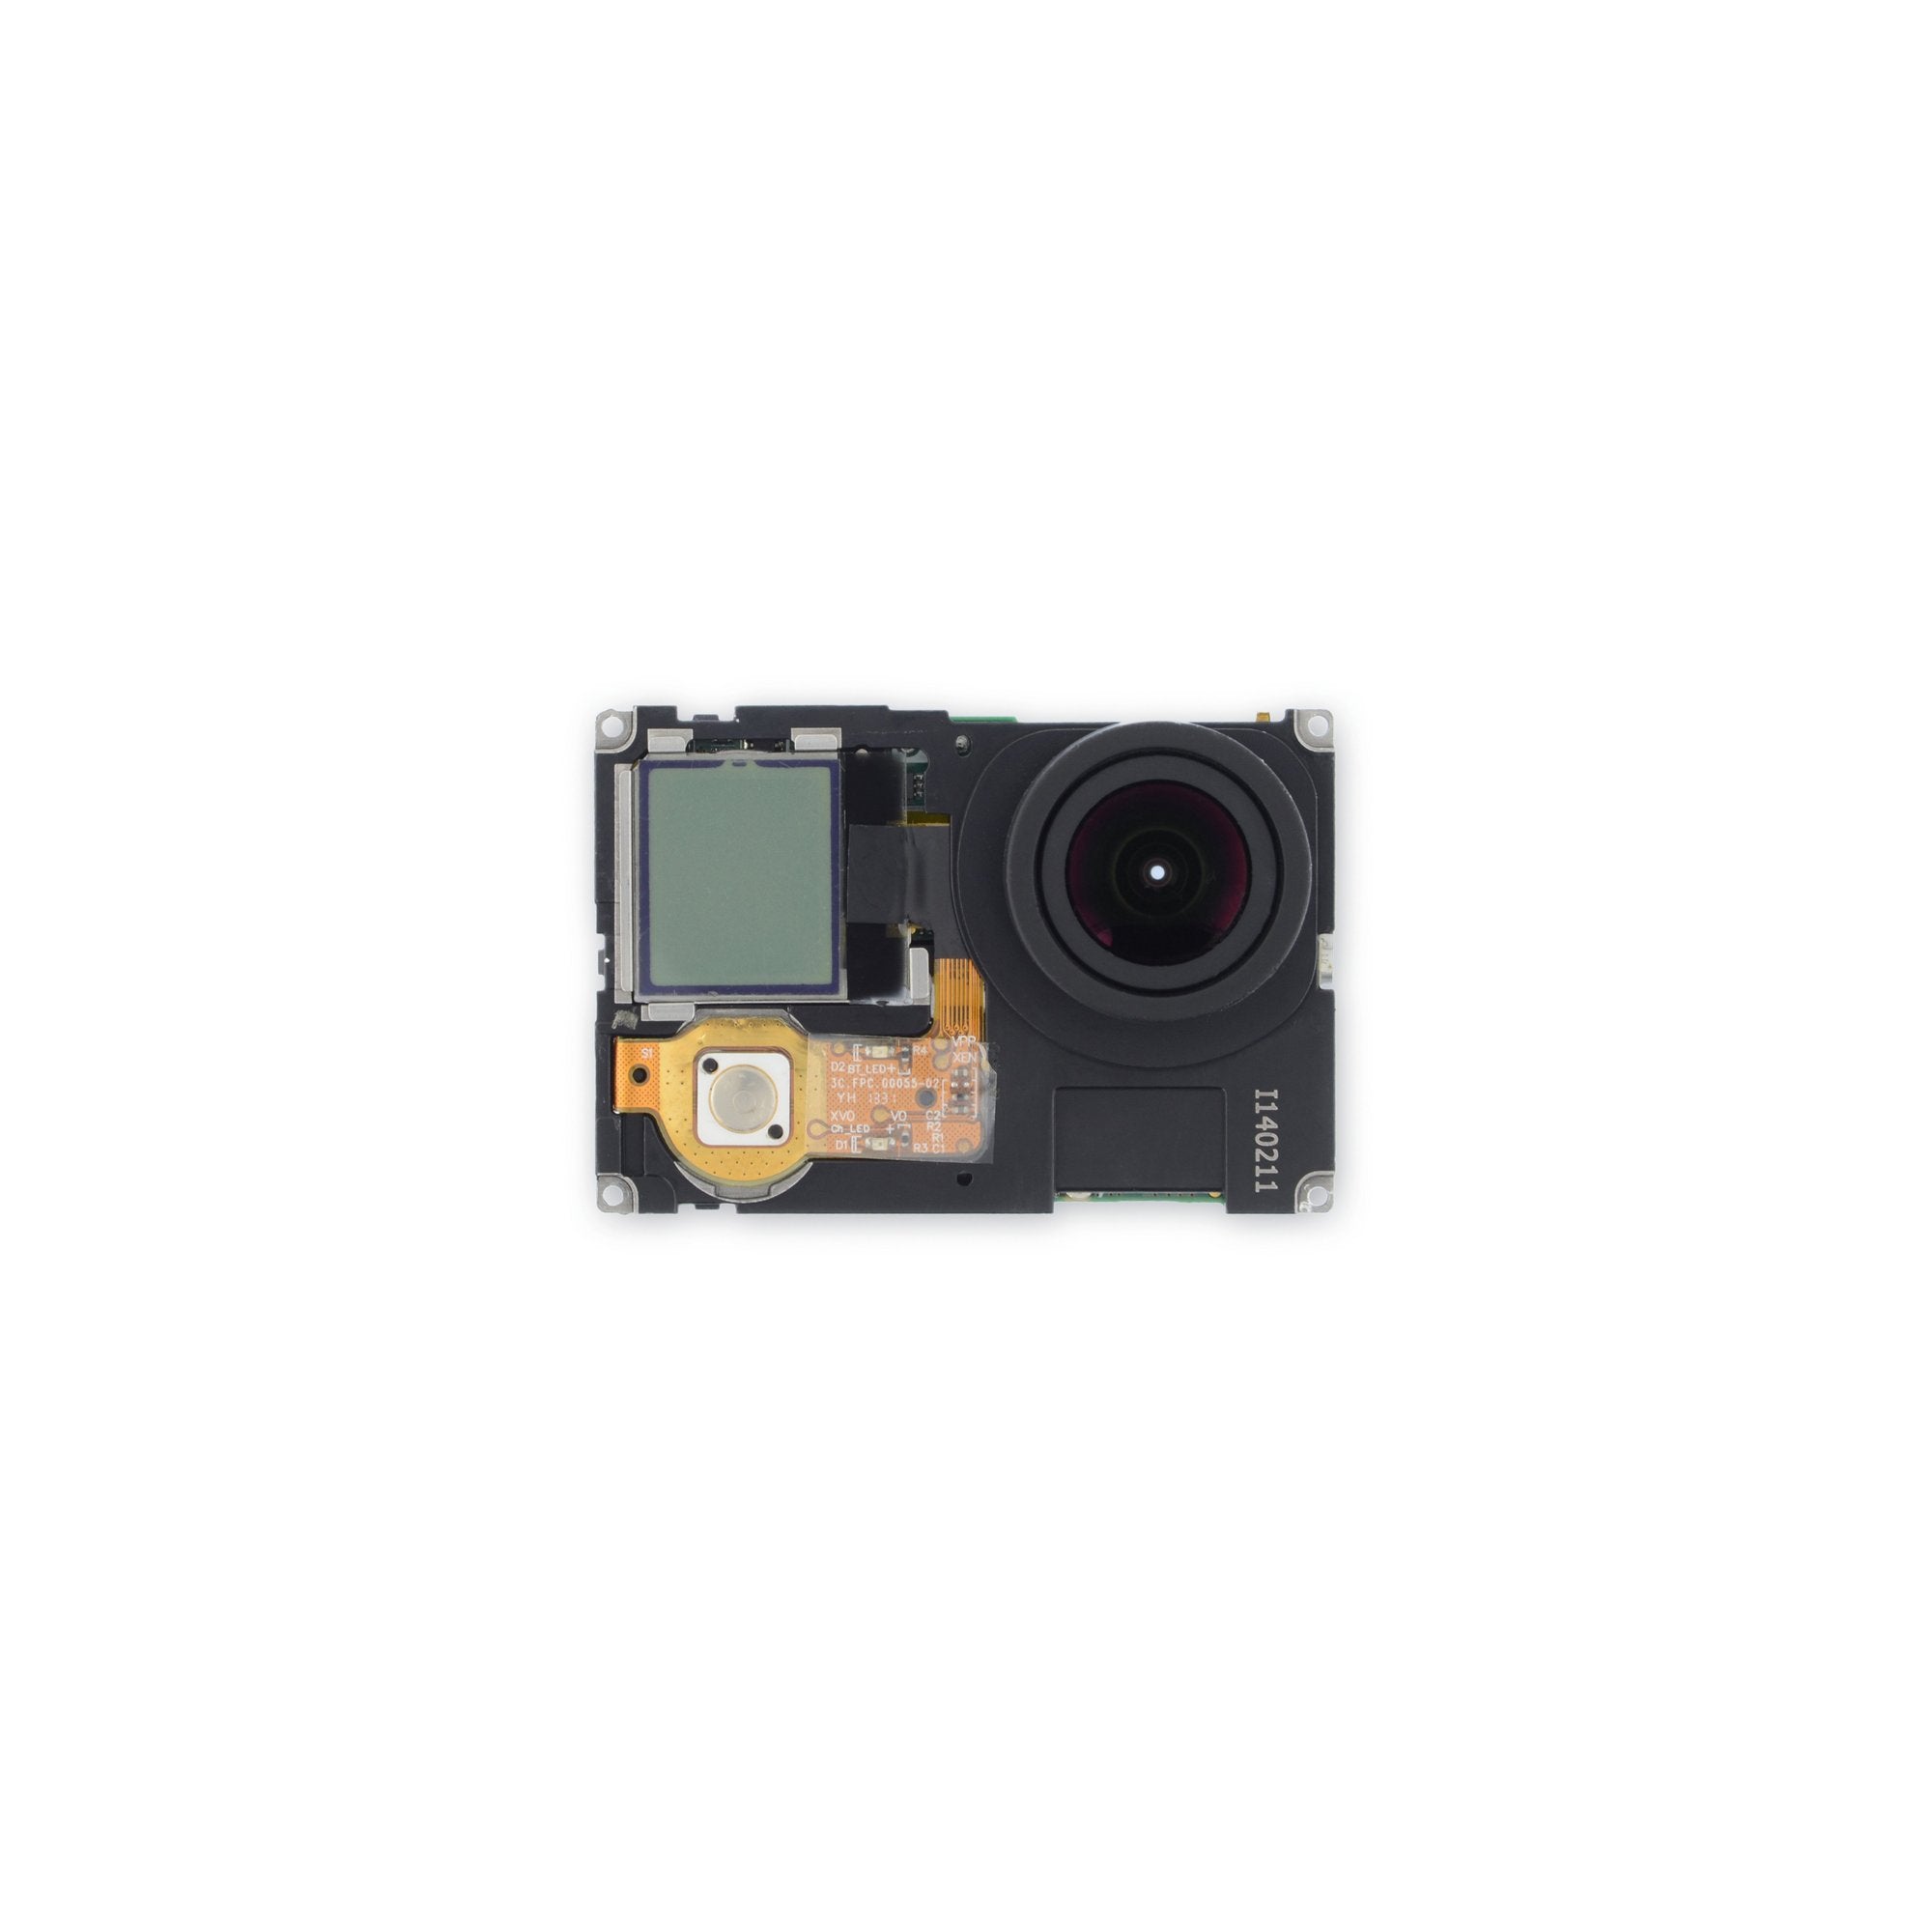 GoPro Hero3+ Black Internal Assembly Used